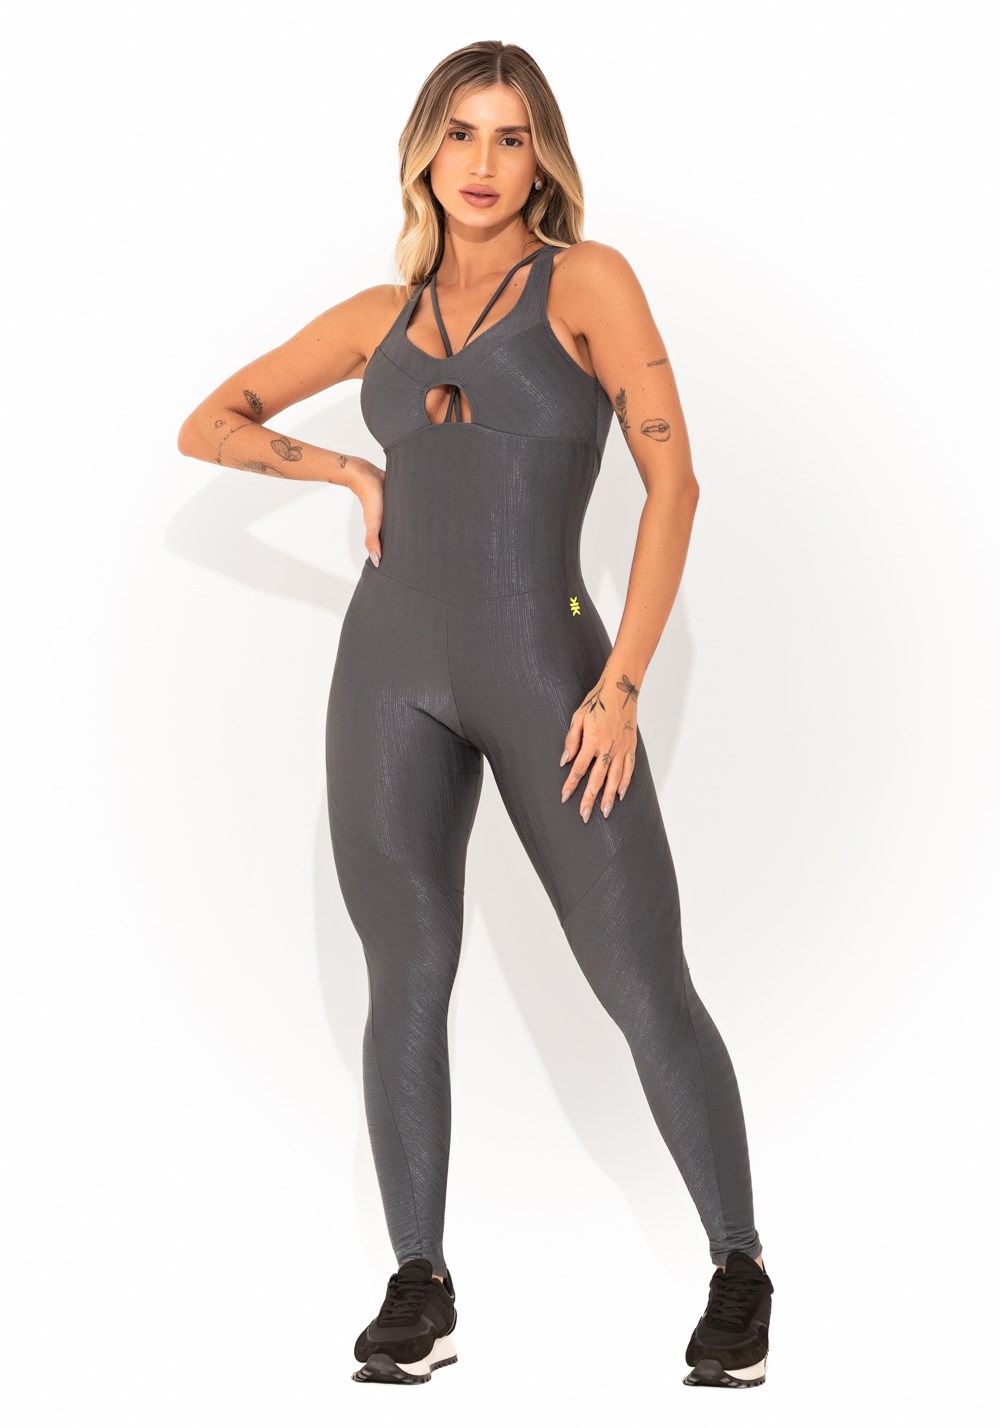 Macacão fitness feminino chumbo texturizado cut-out elegance